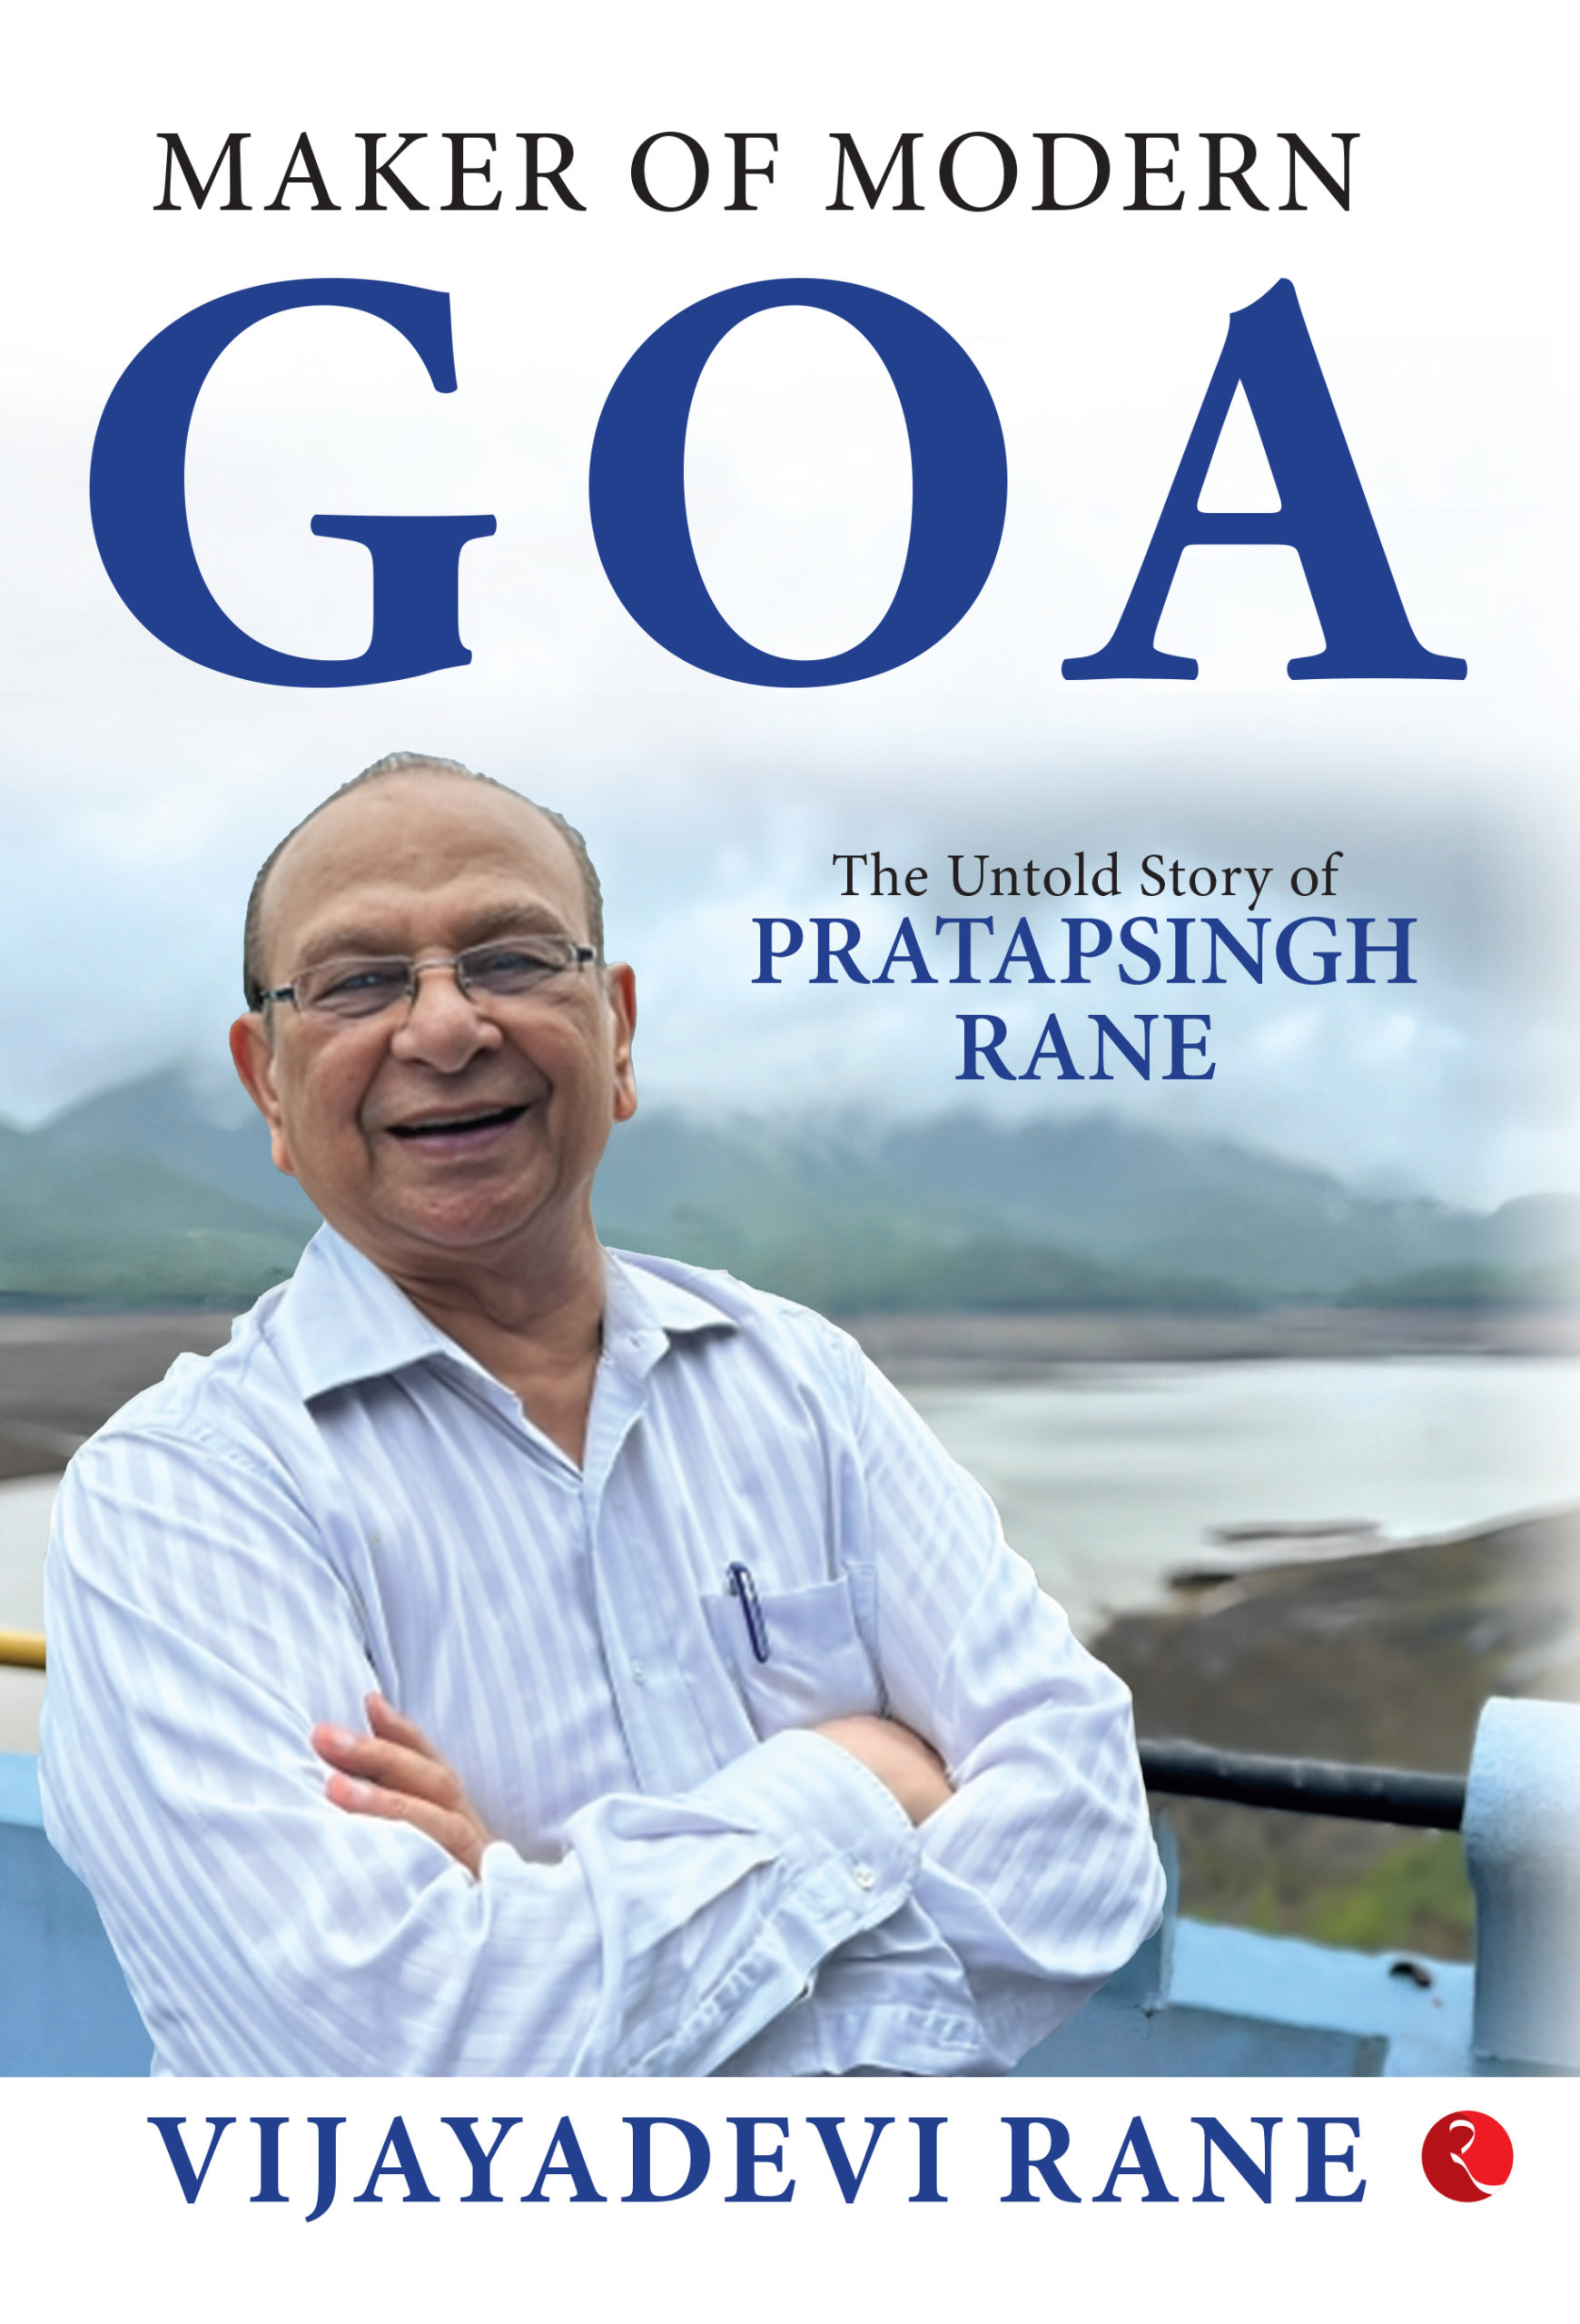 Rupa Publications on X: Radhakrishnan Pillai's book